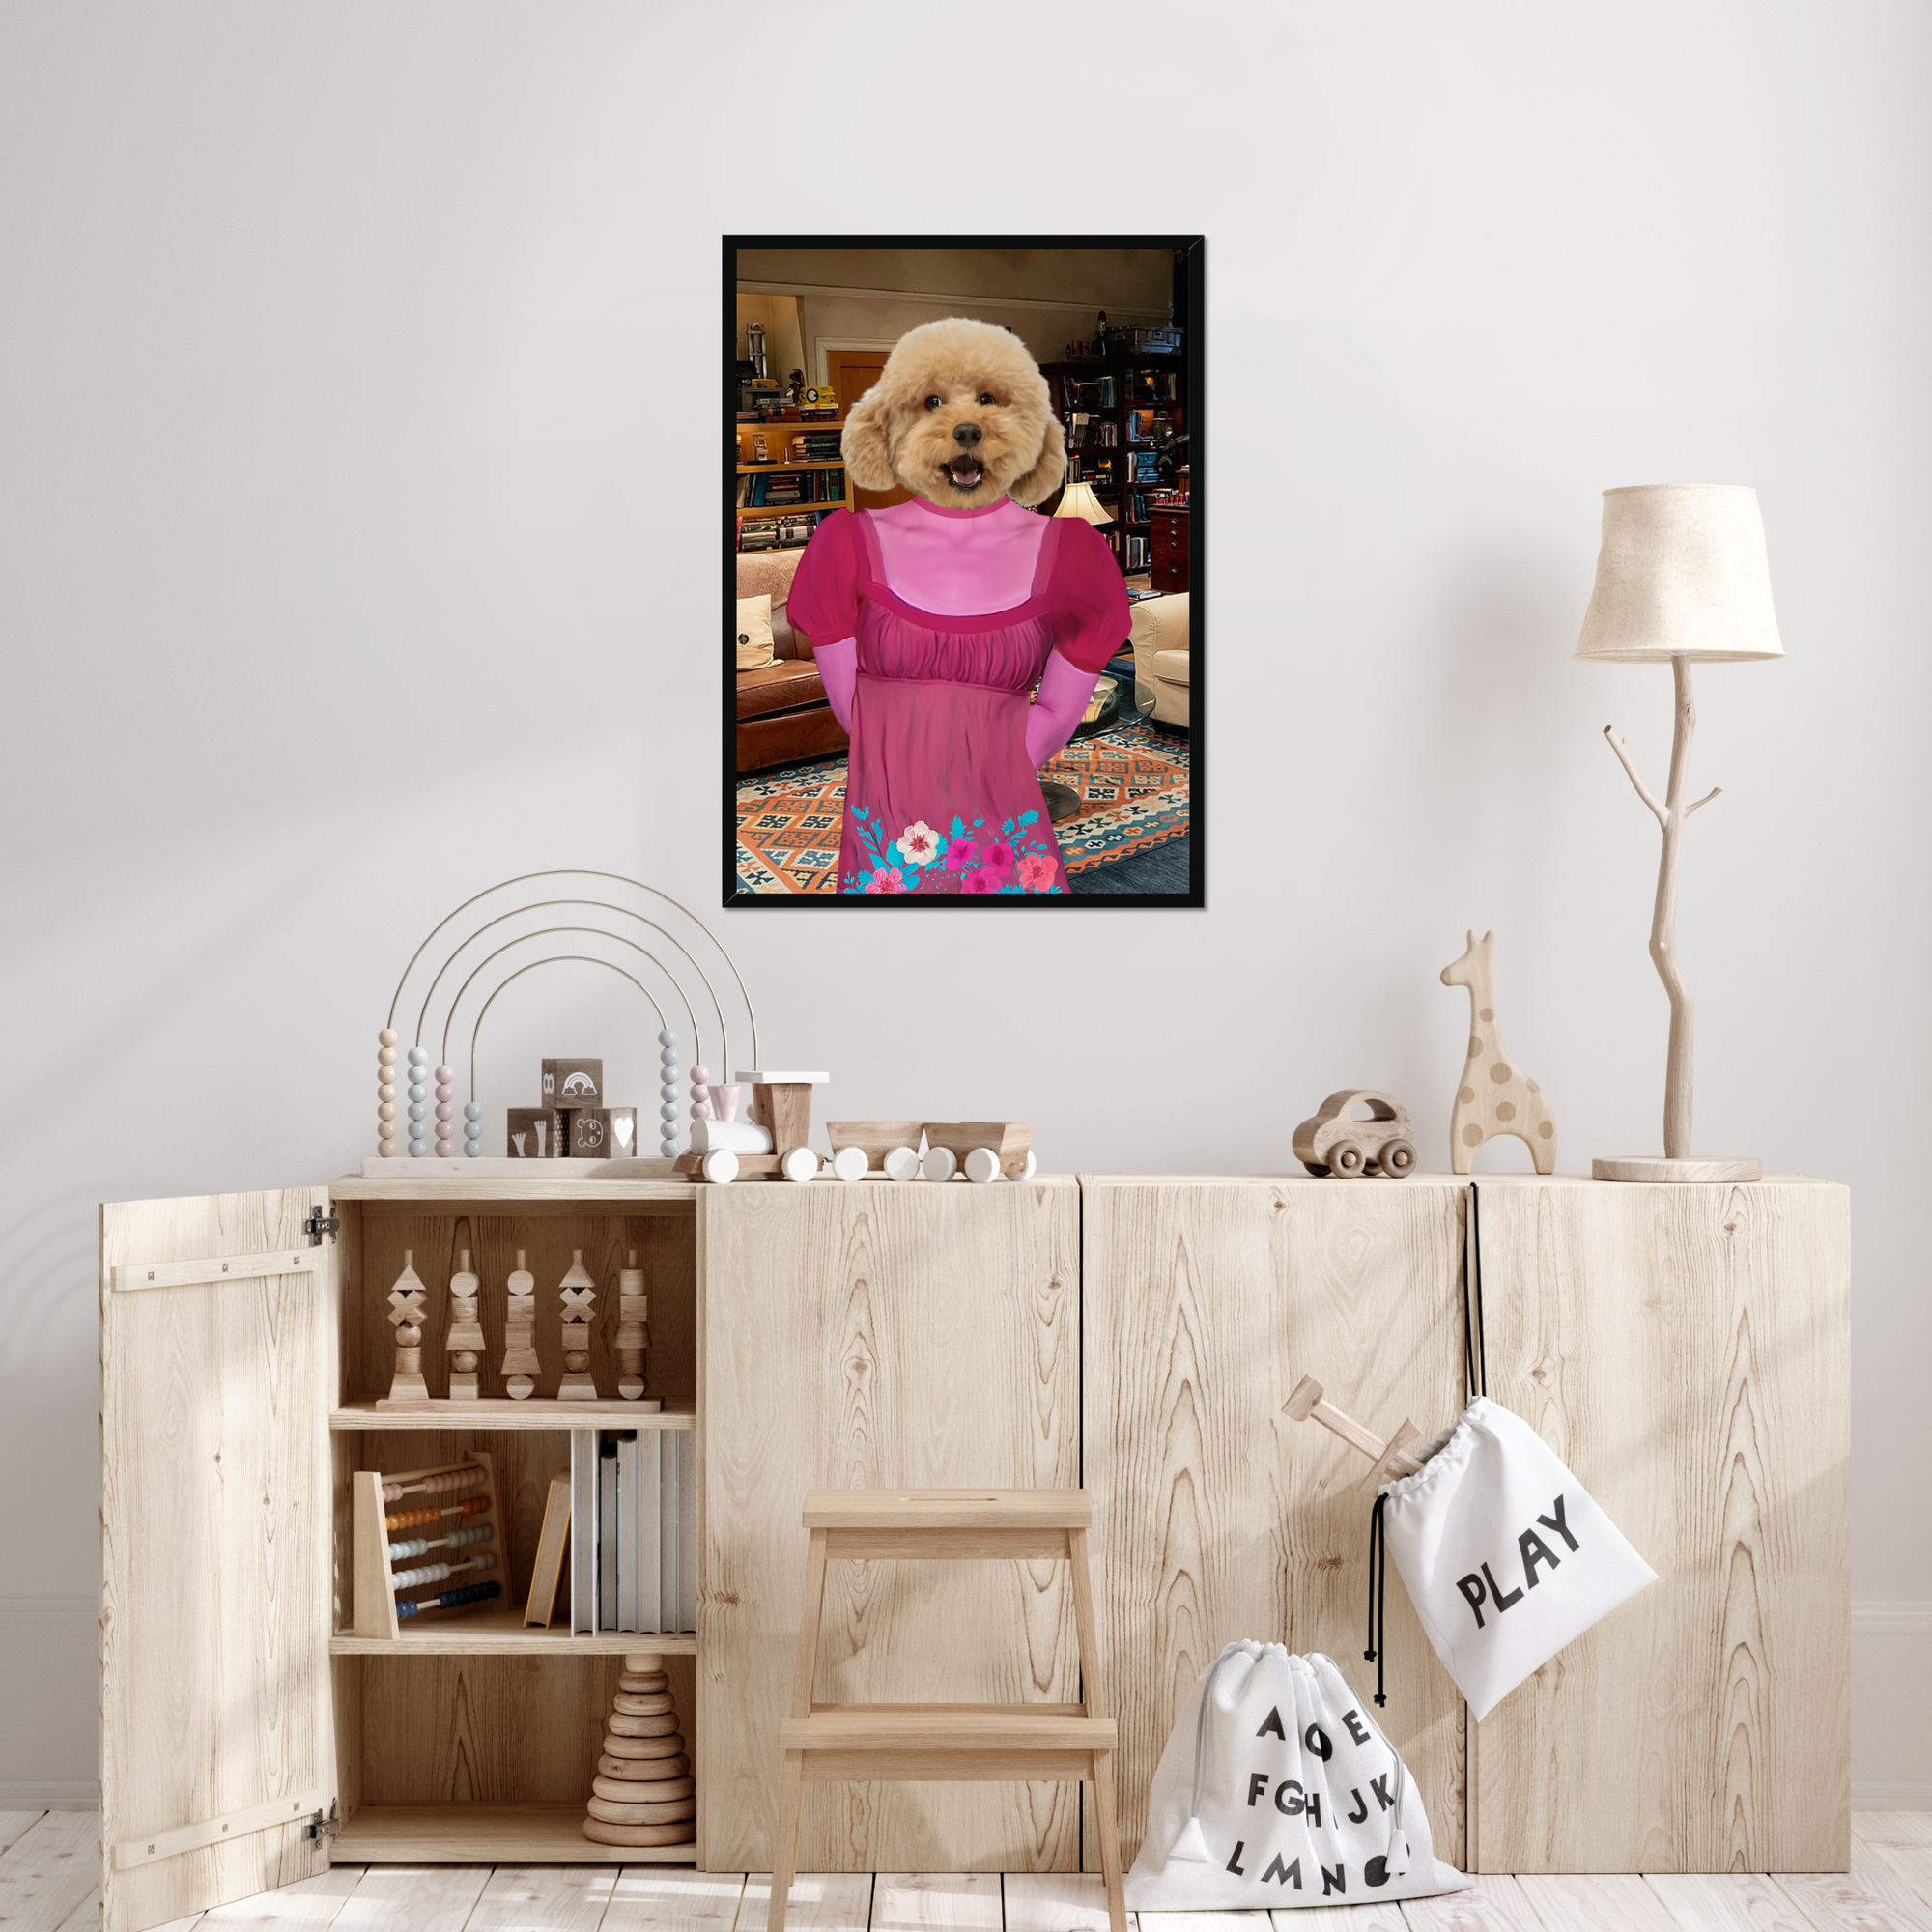 Paw & Glory, pawandglory, custom pet painting, dog canvas art, paintings of pets from photos, custom dog painting, pet portraits, funny dog paintings, small dog portrait